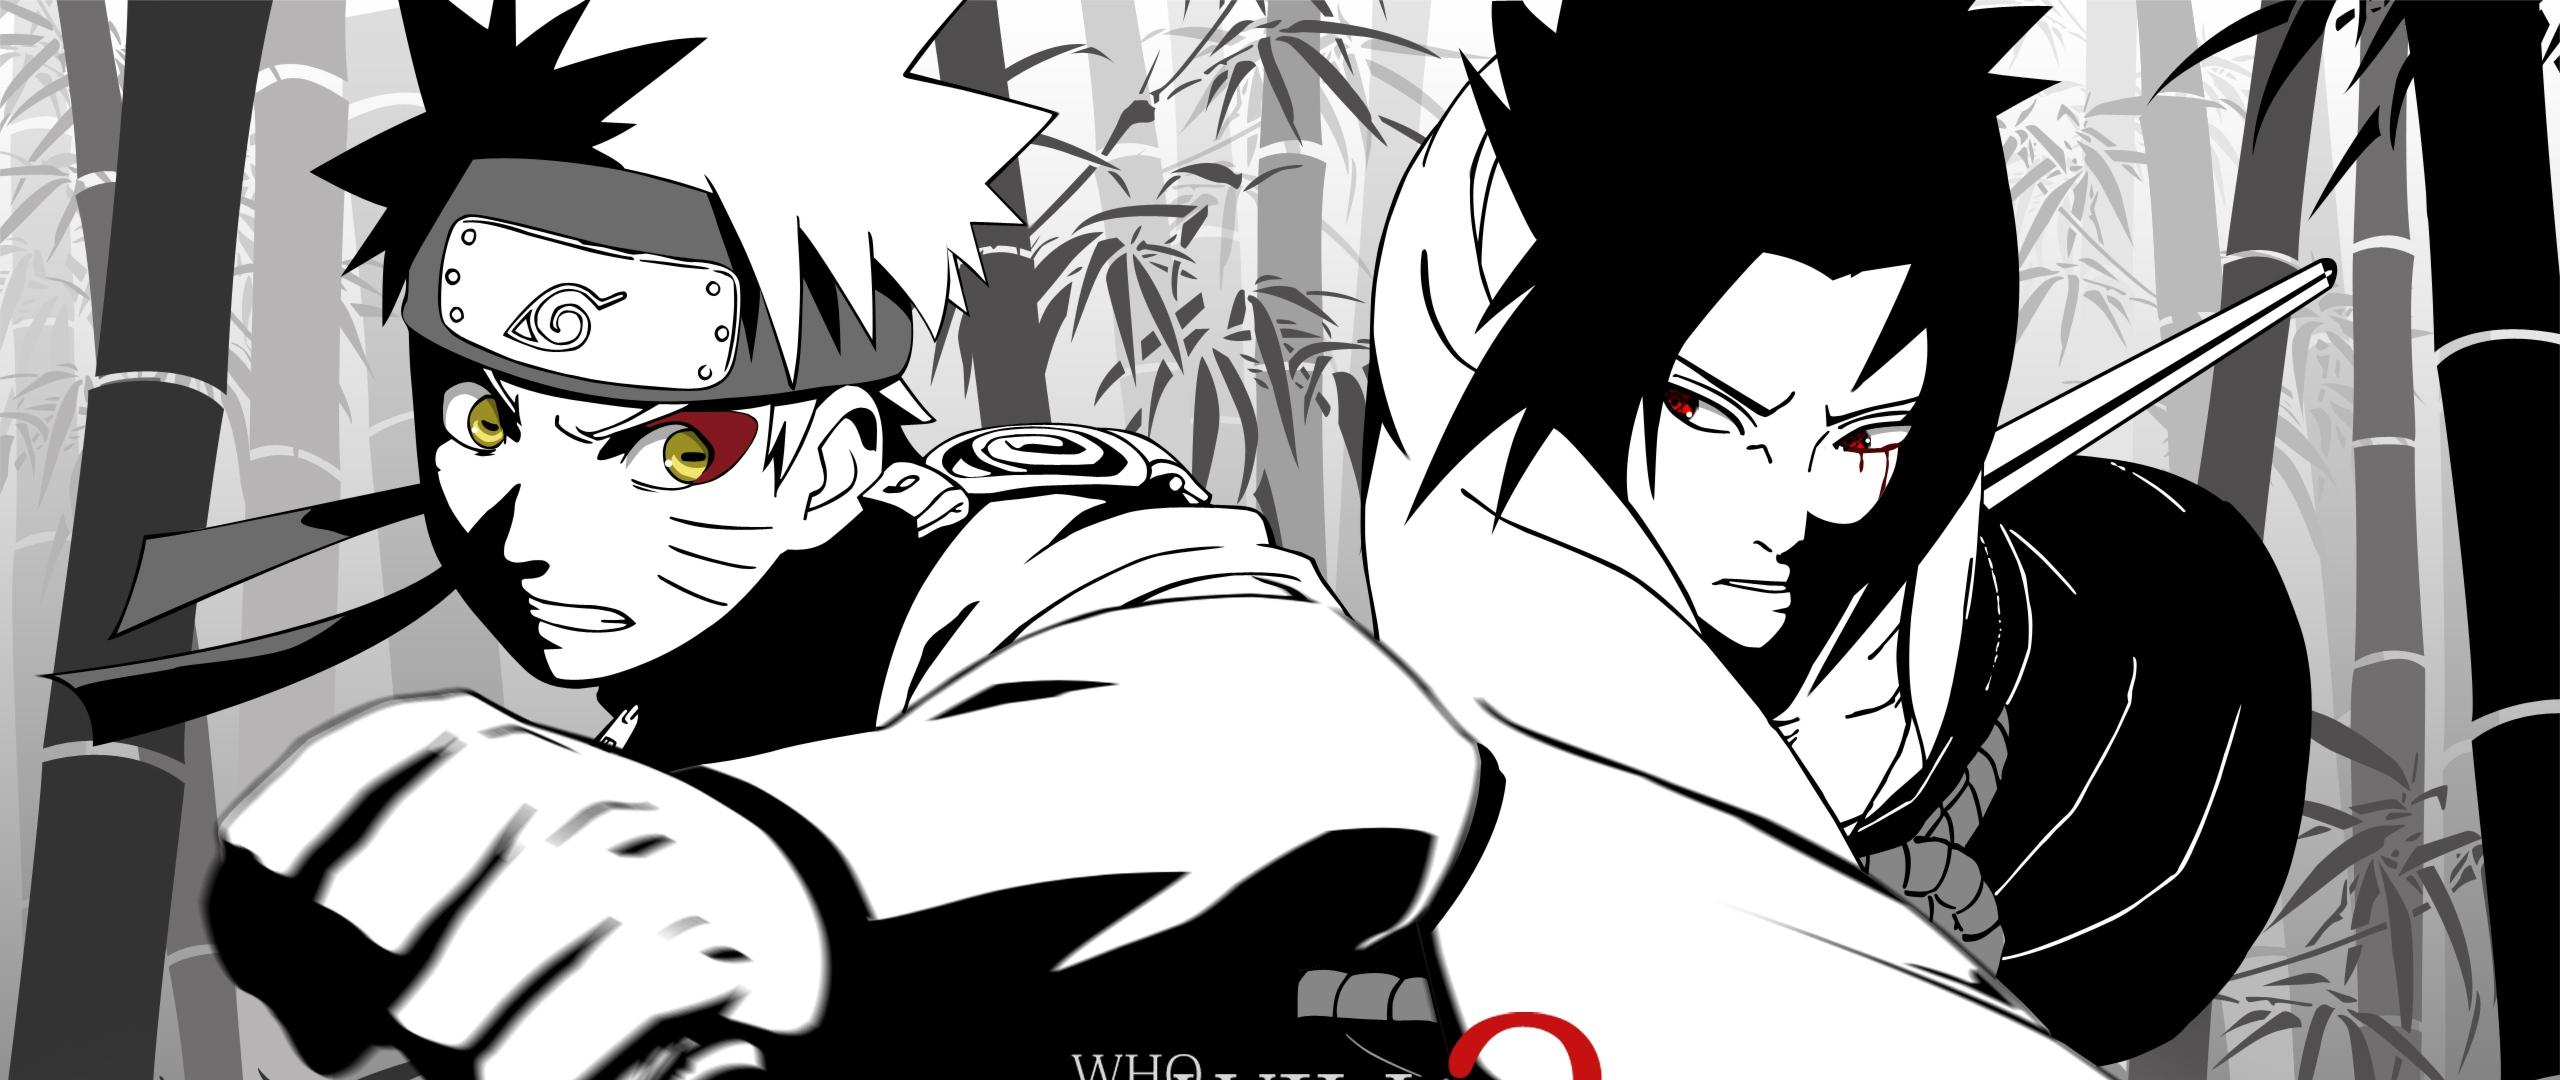 Wallpaper Anime, Naruto Vs Sasuke, Guys, Posture, Battle